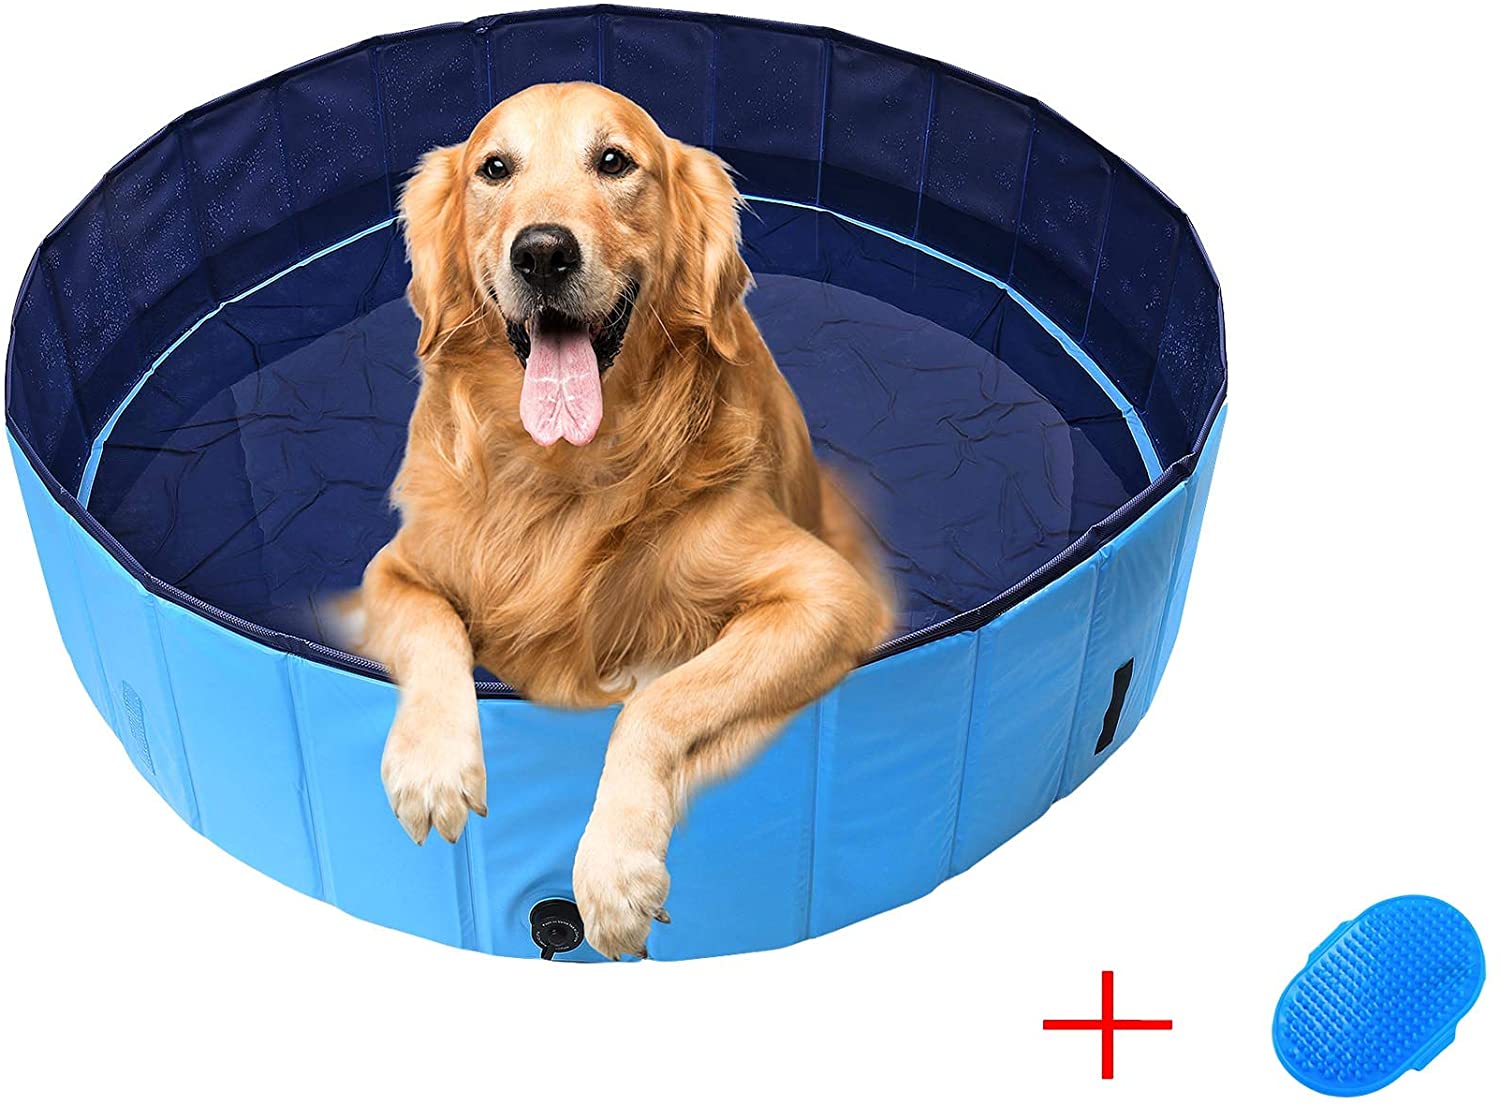  120x30cm Piscina de Baño Ducha Plegable para Mascota Bañera Portátil Perro/Gato Animales Azul Perros Diametro 120cm y Altura 30cm Natacion Mascotas 